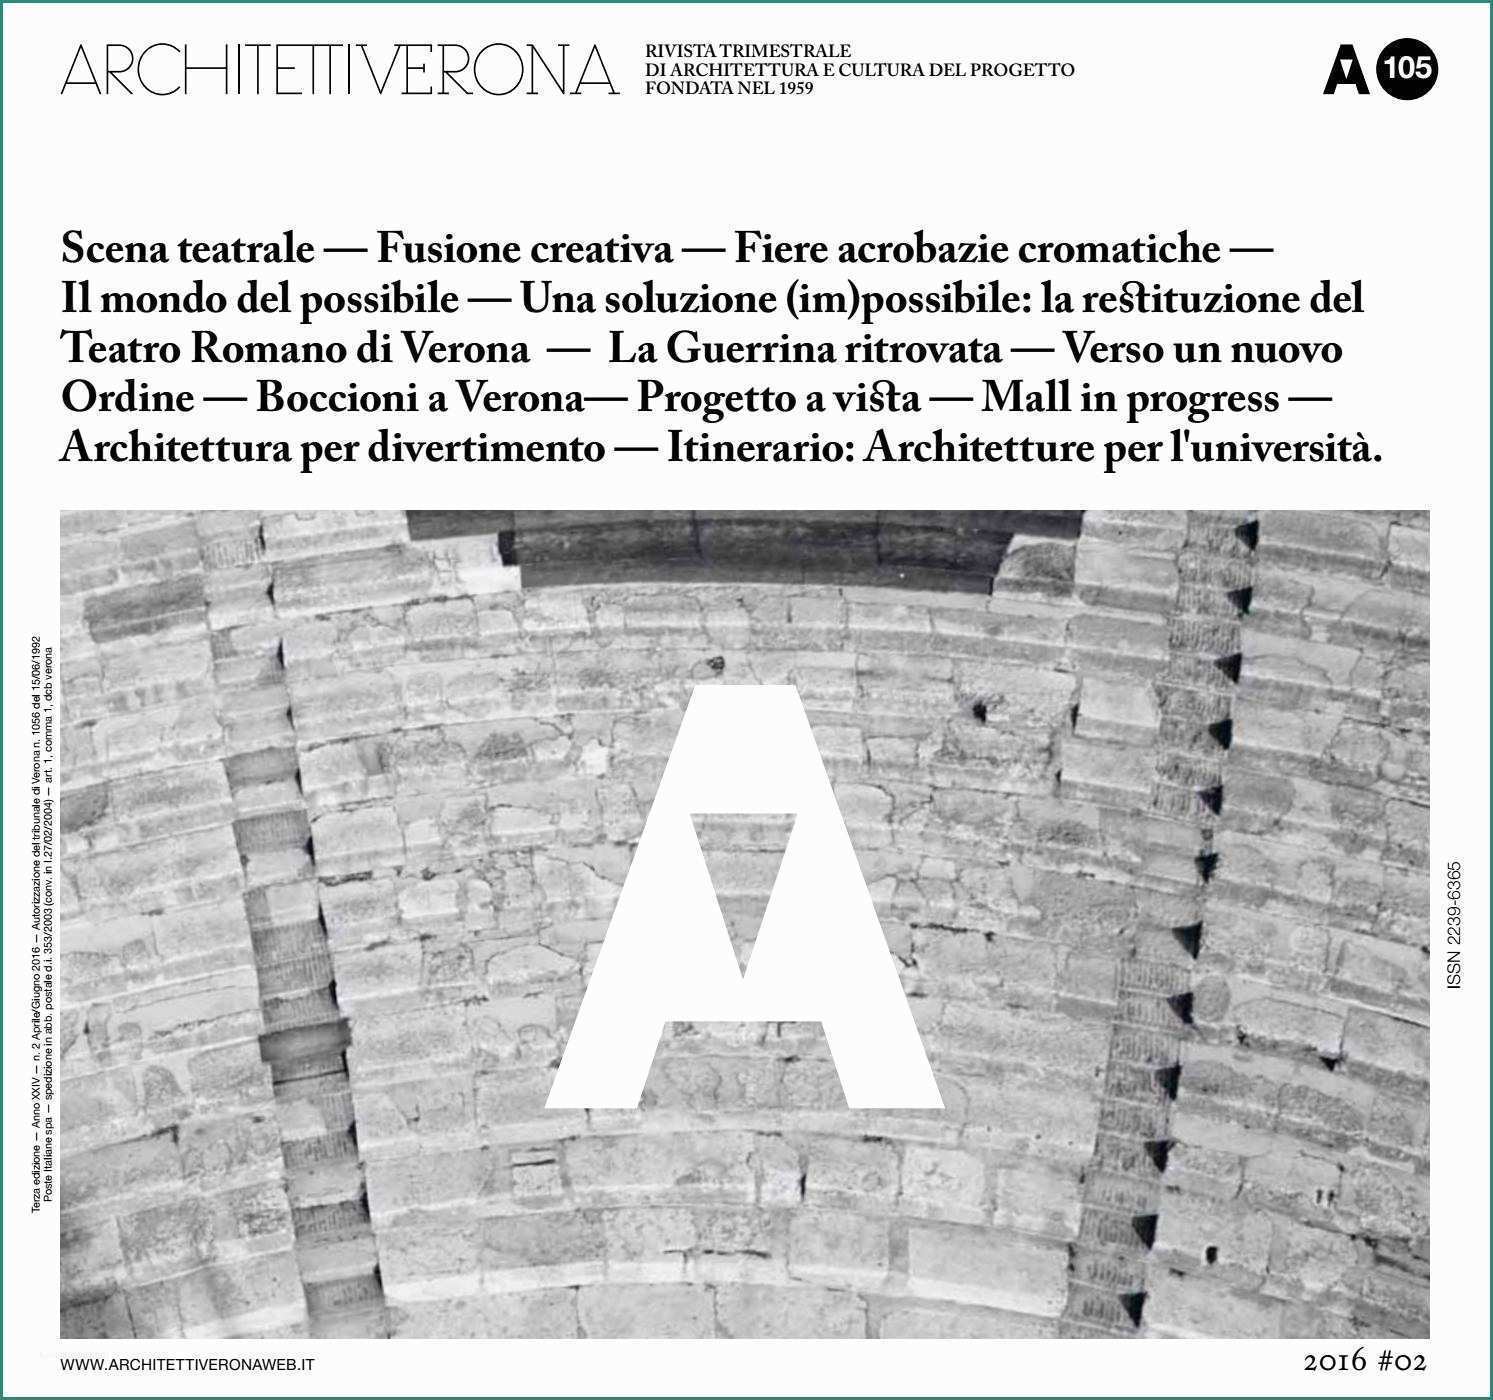 Lamiera Grecata Dwg E Architettiverona 105 by Architettiverona issuu